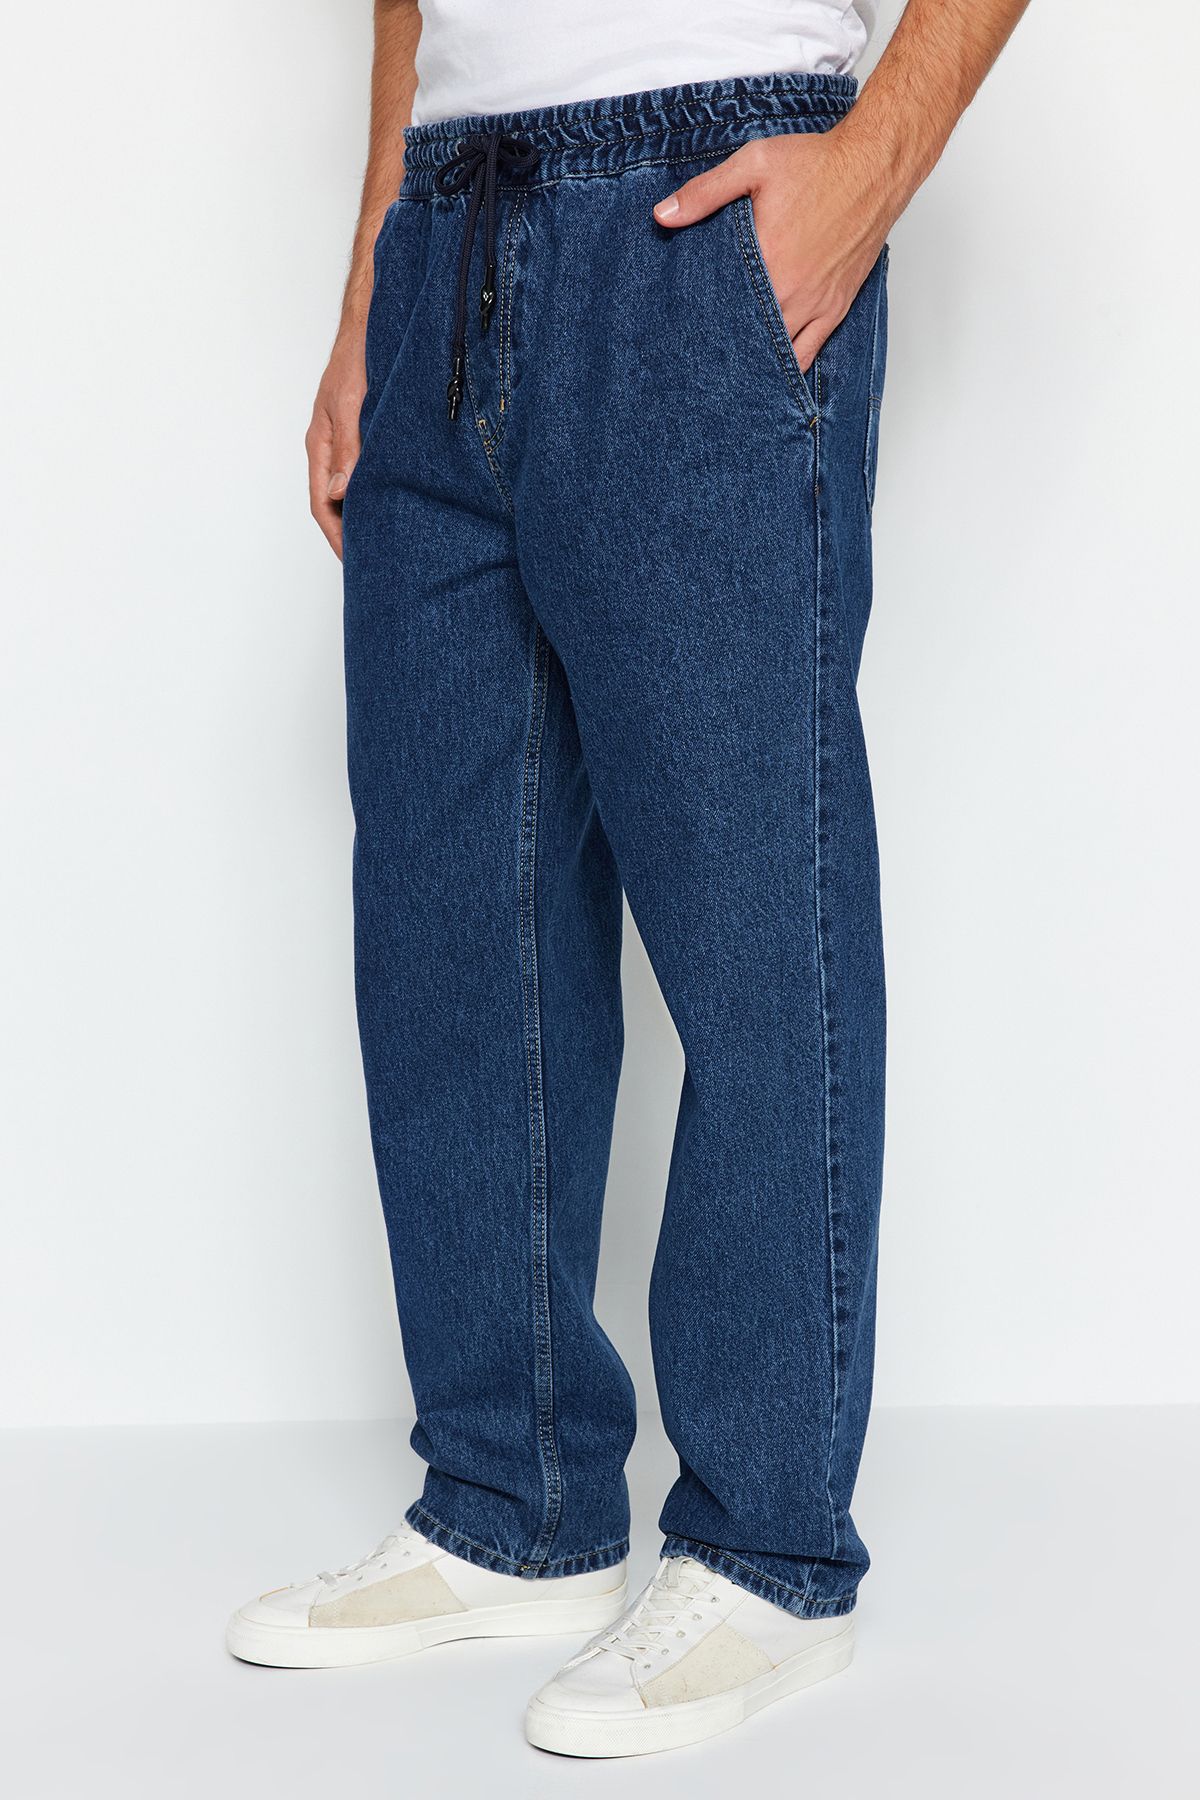 Trendyol Collection Jeans - Trendyol - Straight - Dunkelblau